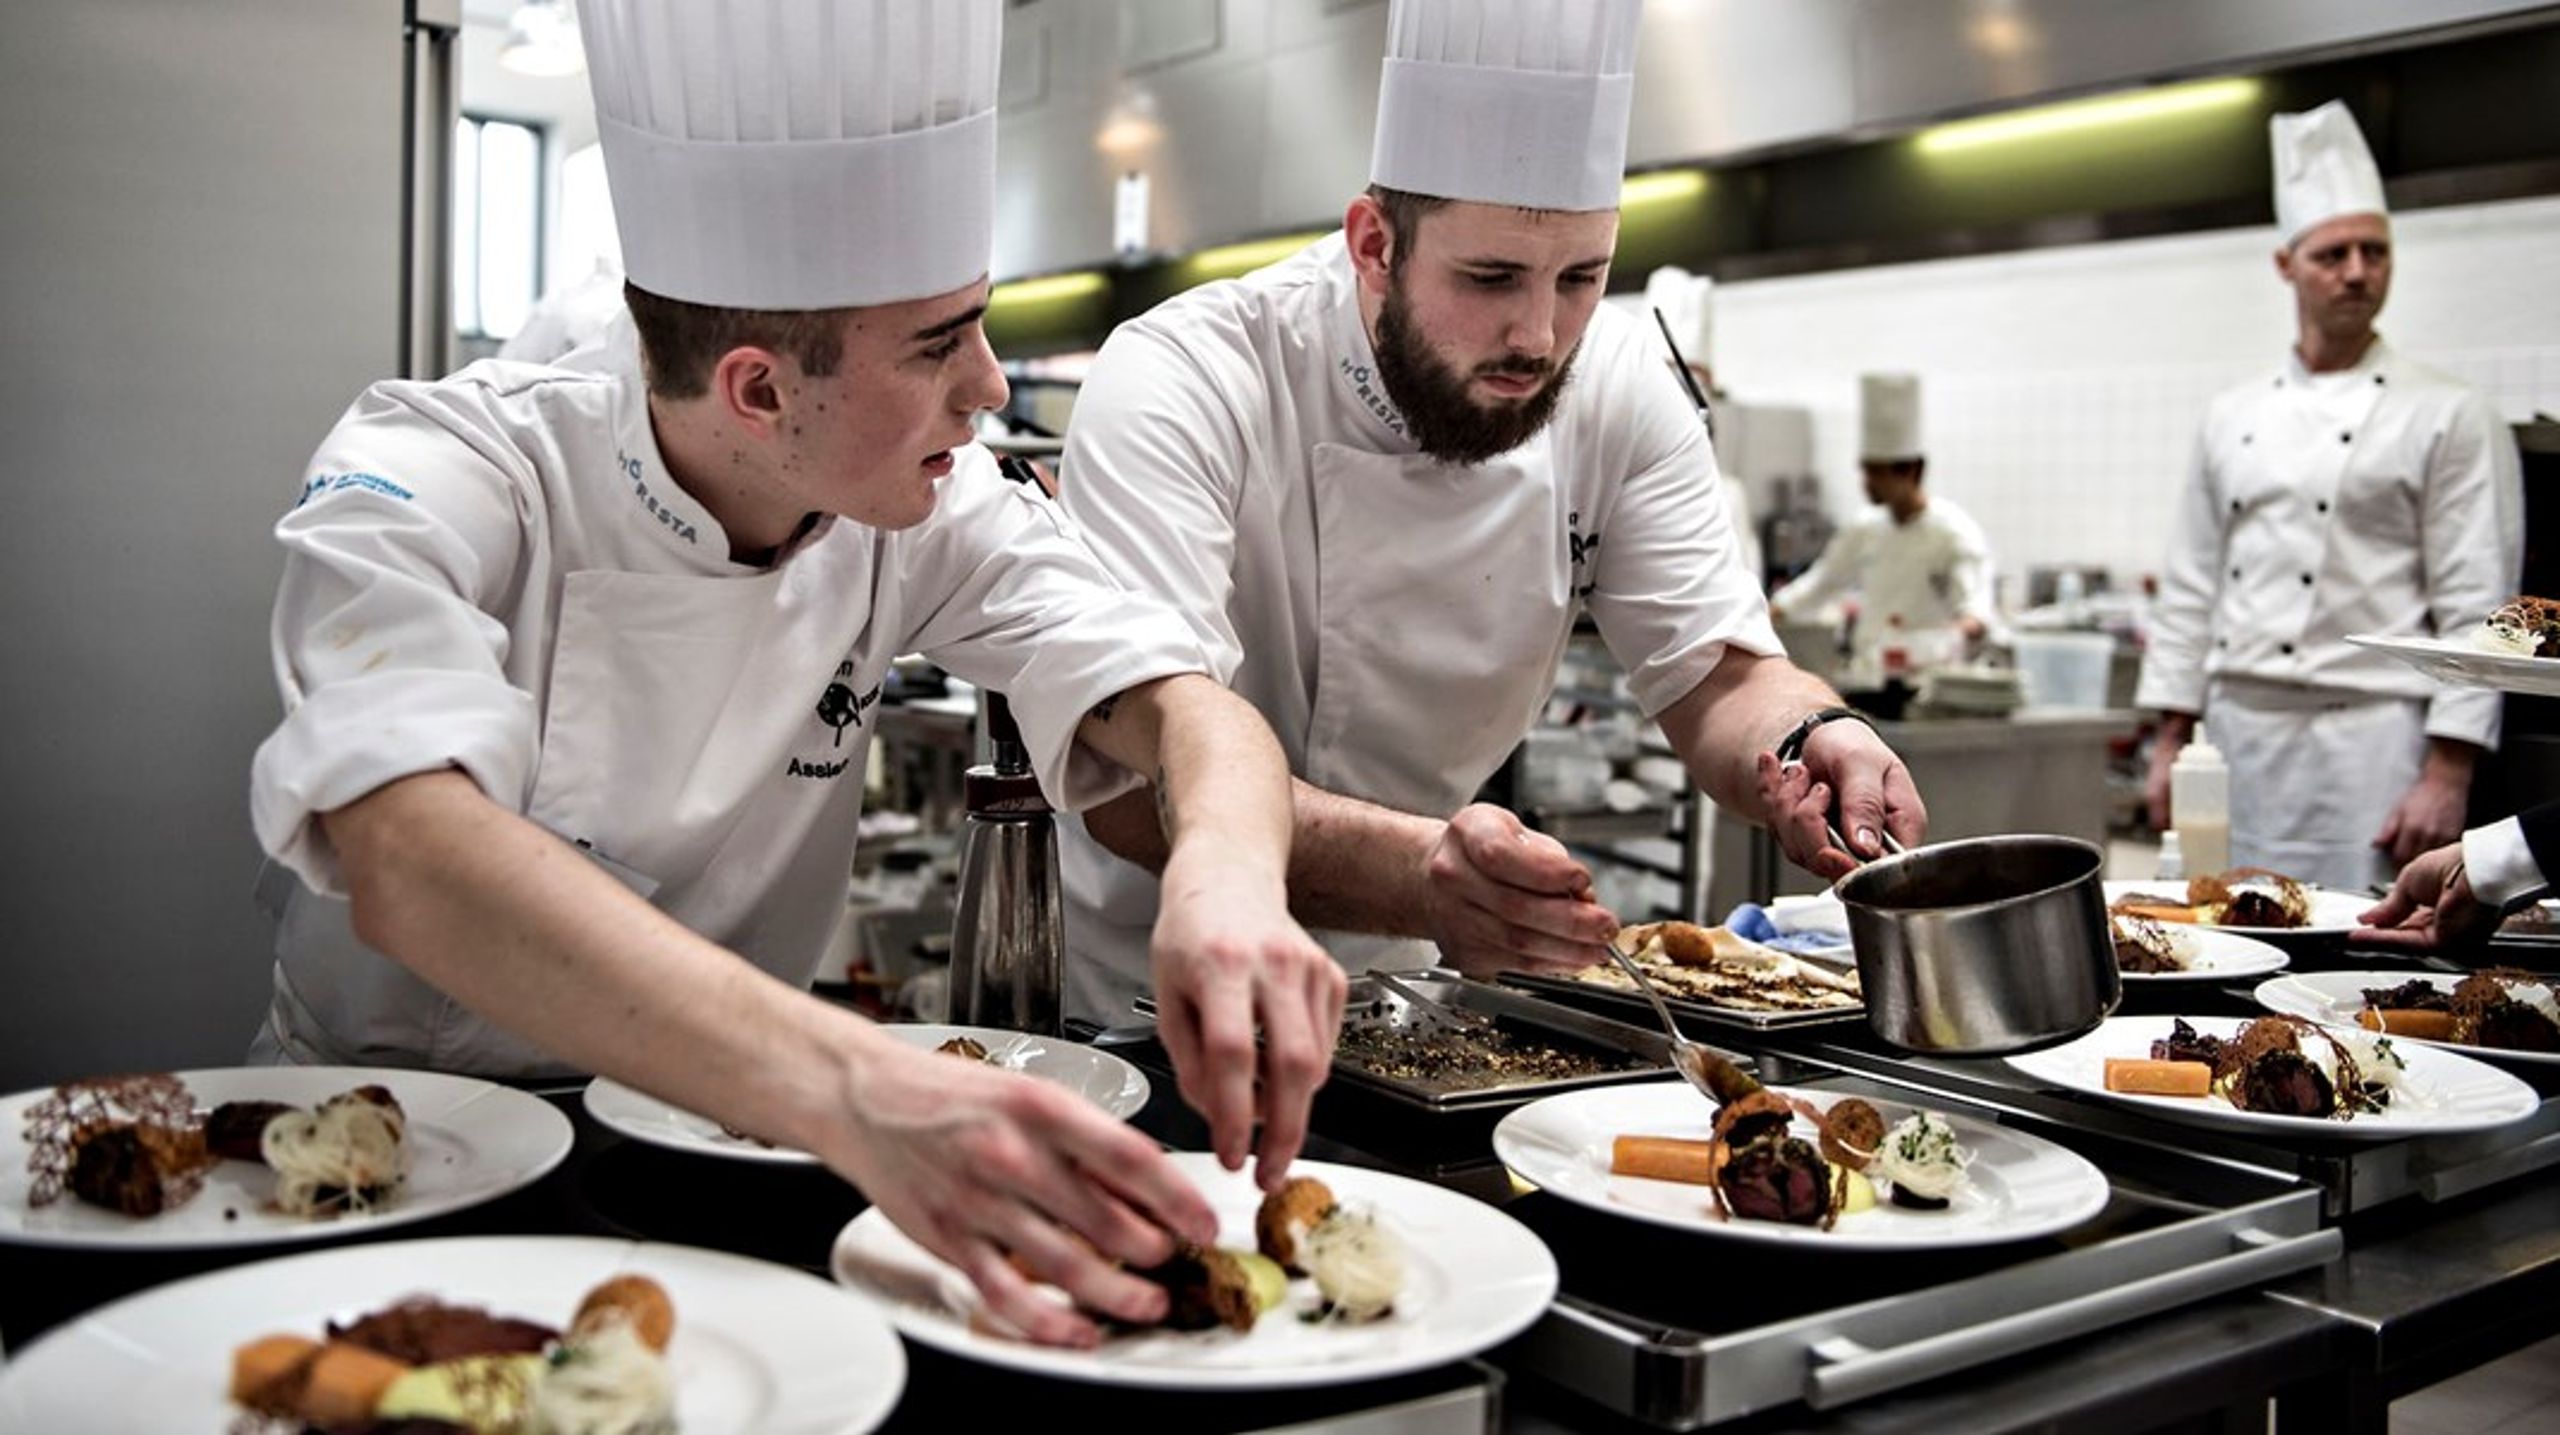 Restaurationsbranchen - og dens uddannelser - er ikke attraktive nok for unge mennesker, skriver Kasper Fogh Hansen.